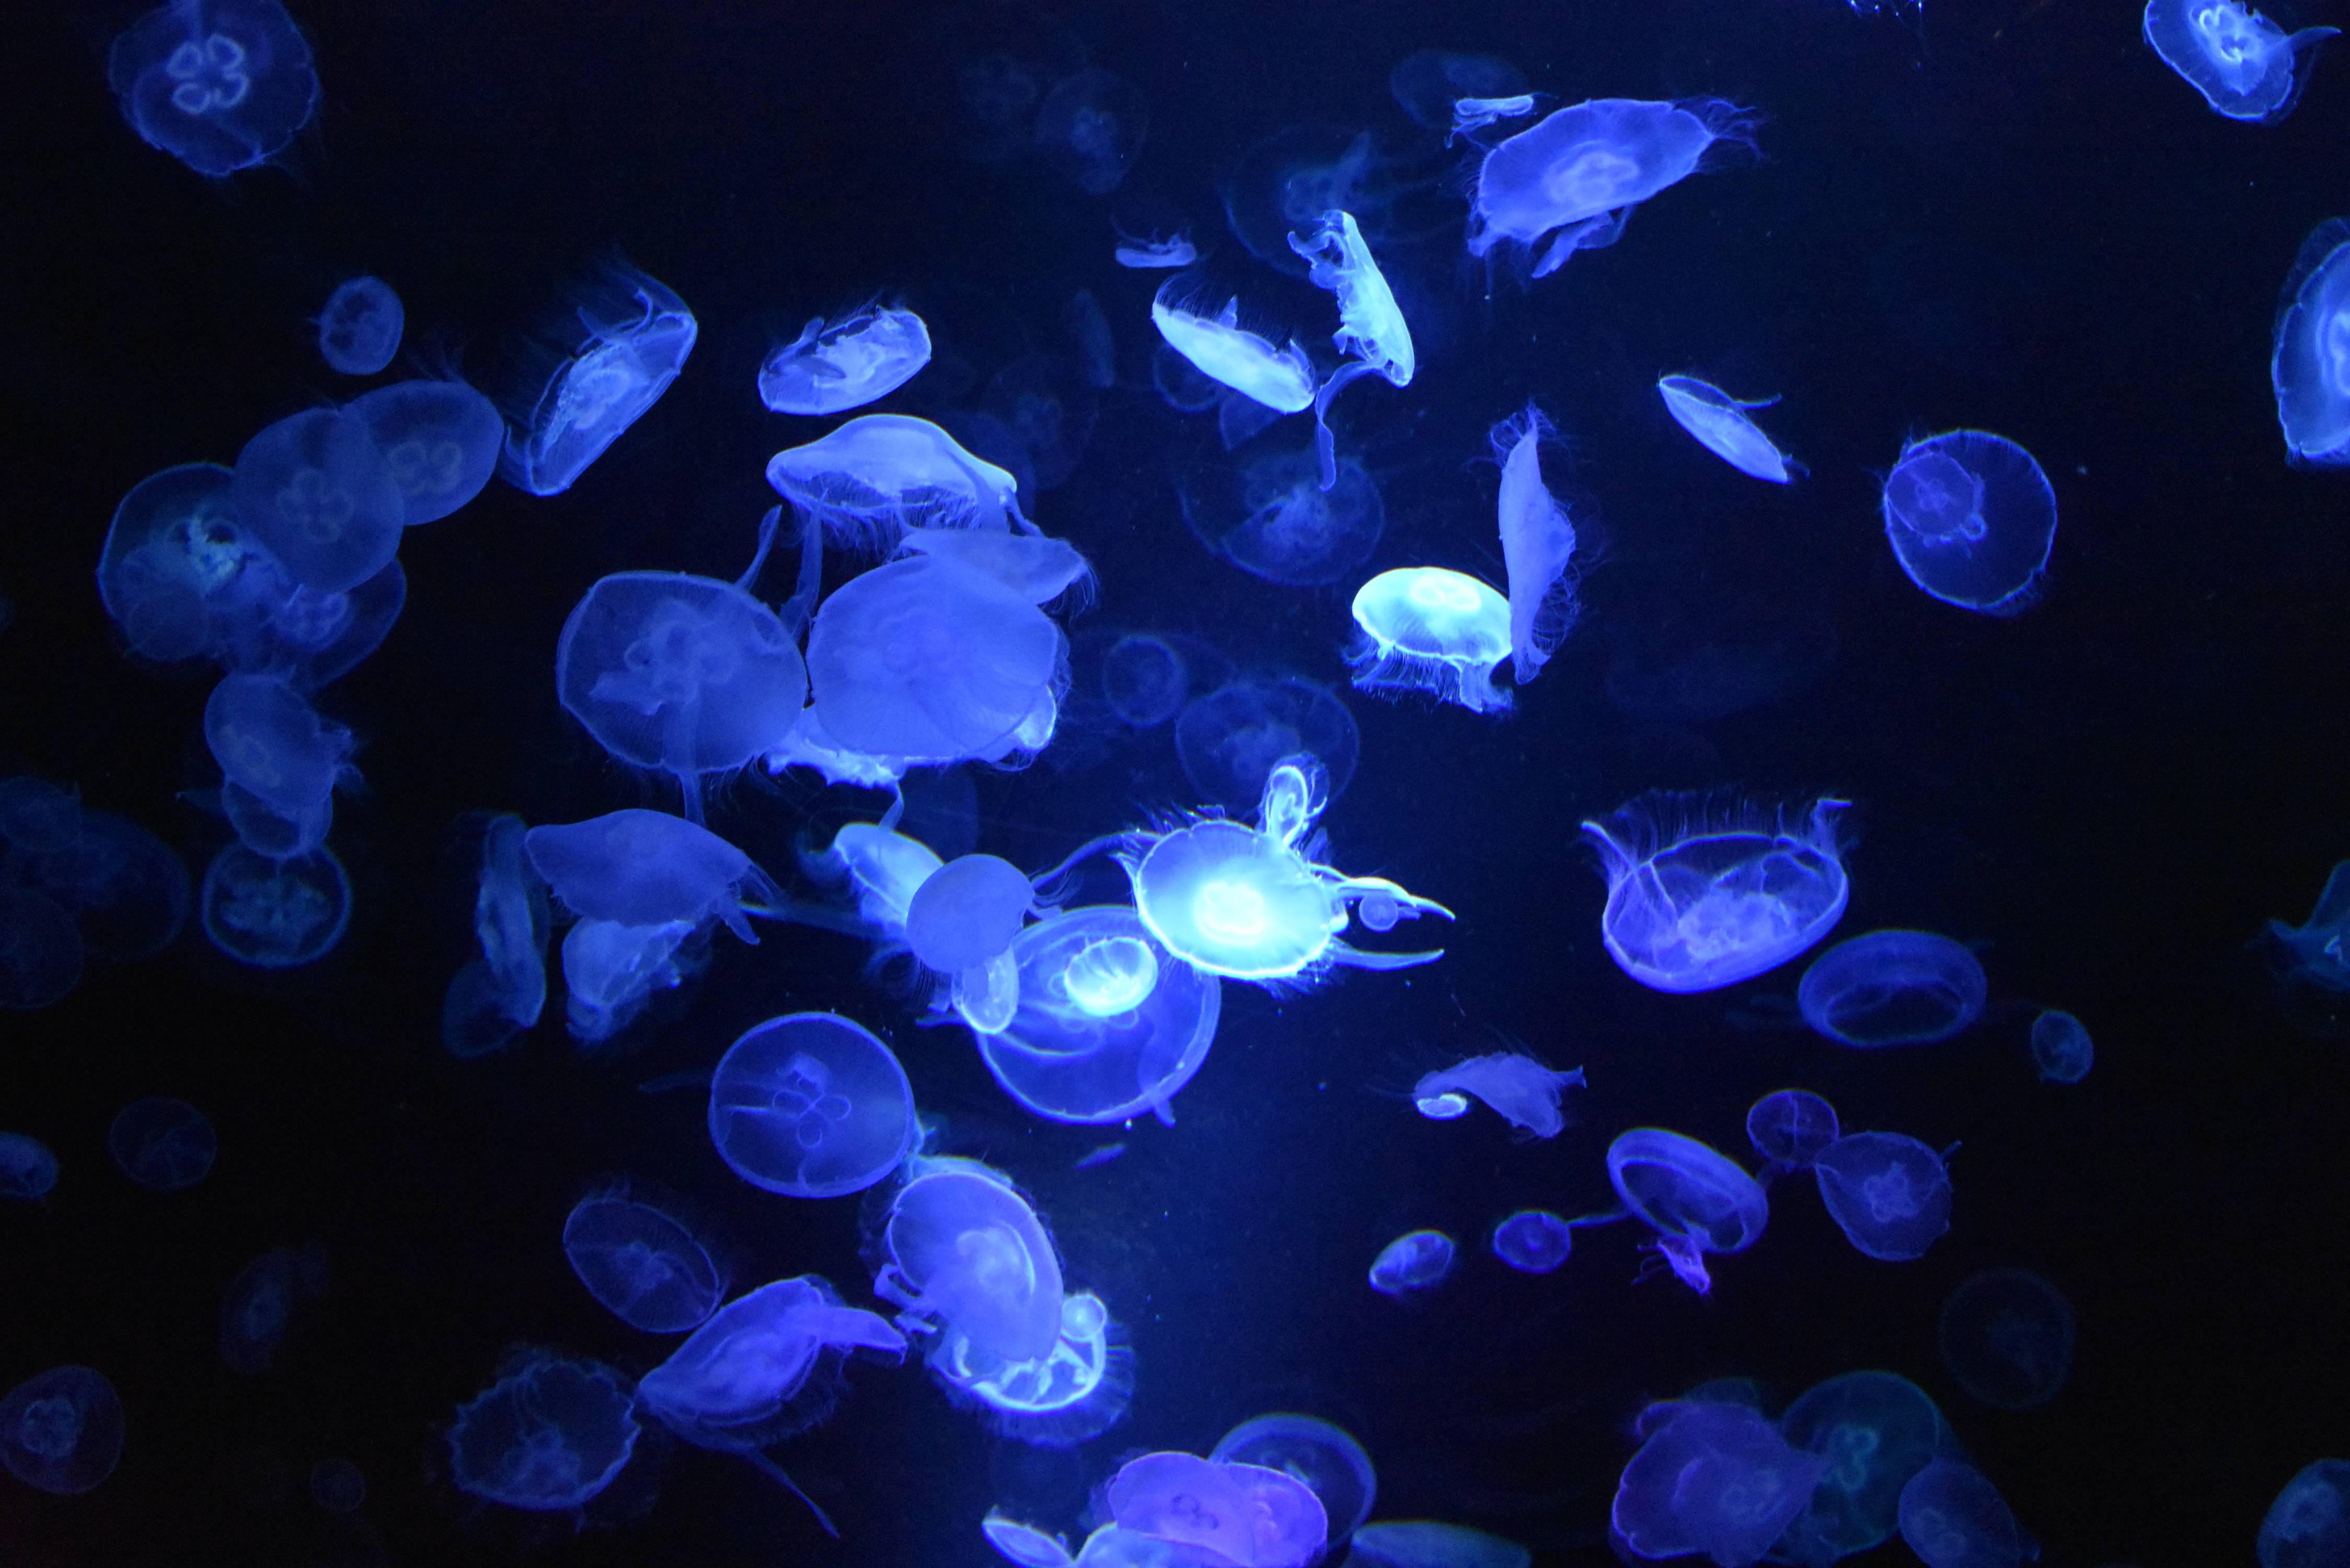 A group of jellyfish in the dark - Underwater